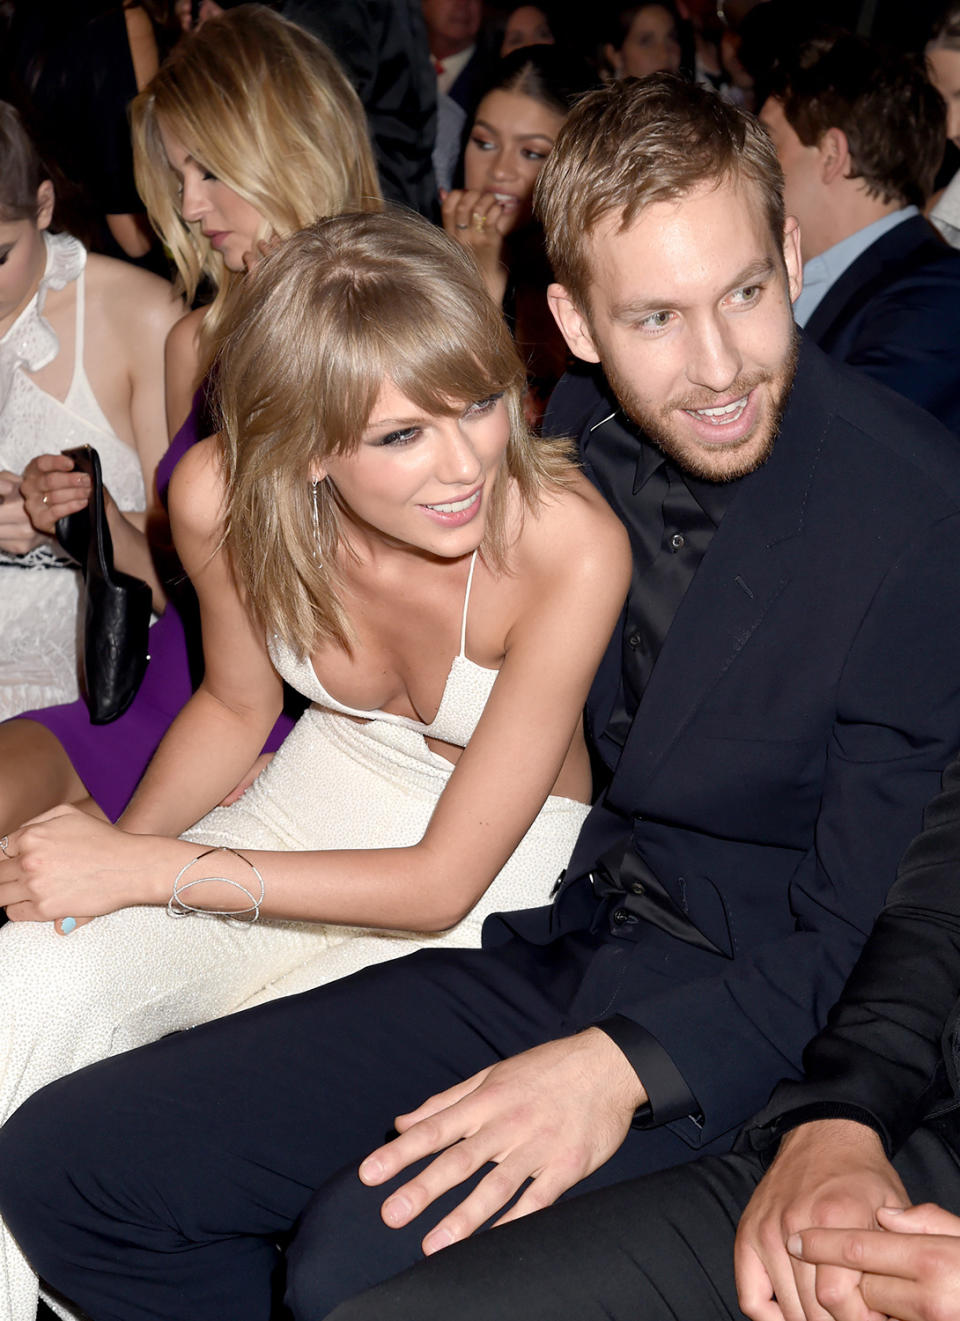 Taylor Swift and DJ Calvin Harris at the 2015 Billboard Music Awards in Las Vegas. (Photo: Jeff Kravitz/BMA2015/FilmMagic)